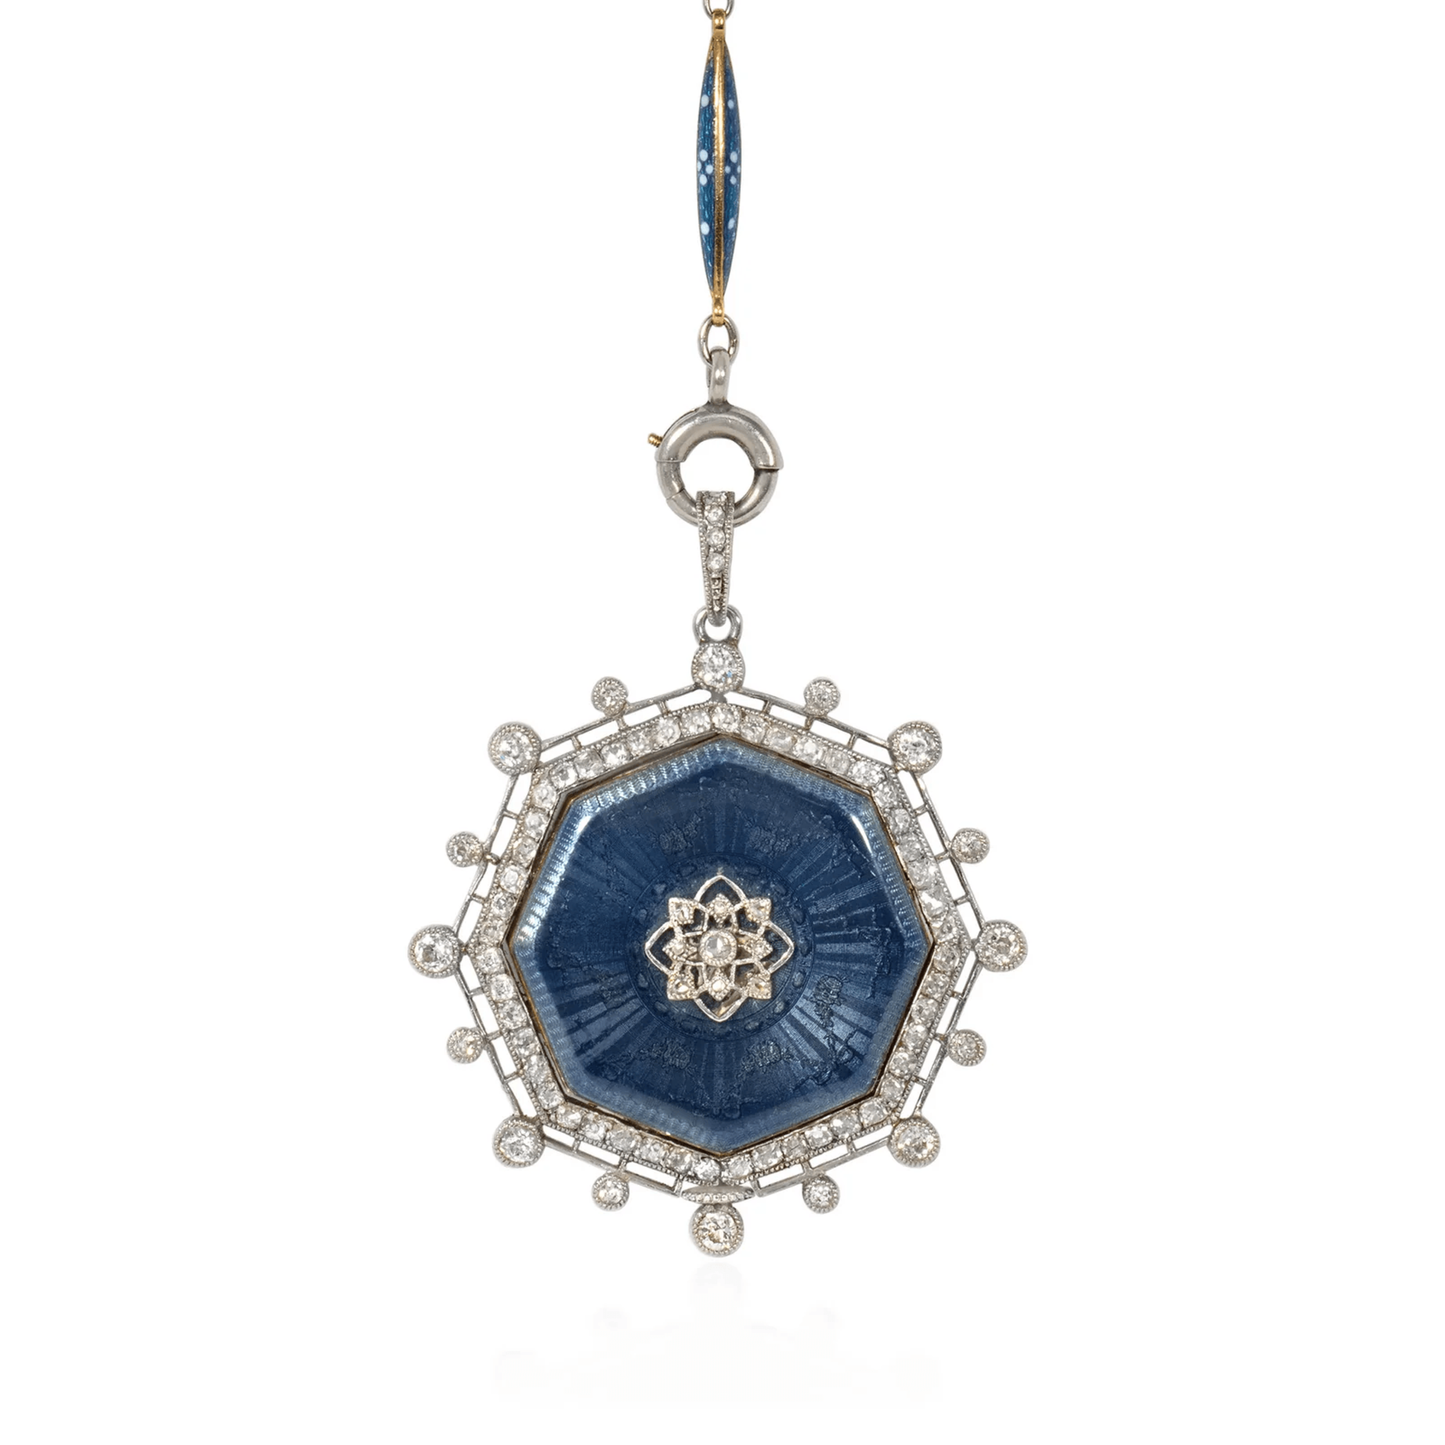 Tiffany & Co. Edwardian Platinum & 14KT Yellow Gold Diamond & Enamel Watch Pendant Necklace close-up front